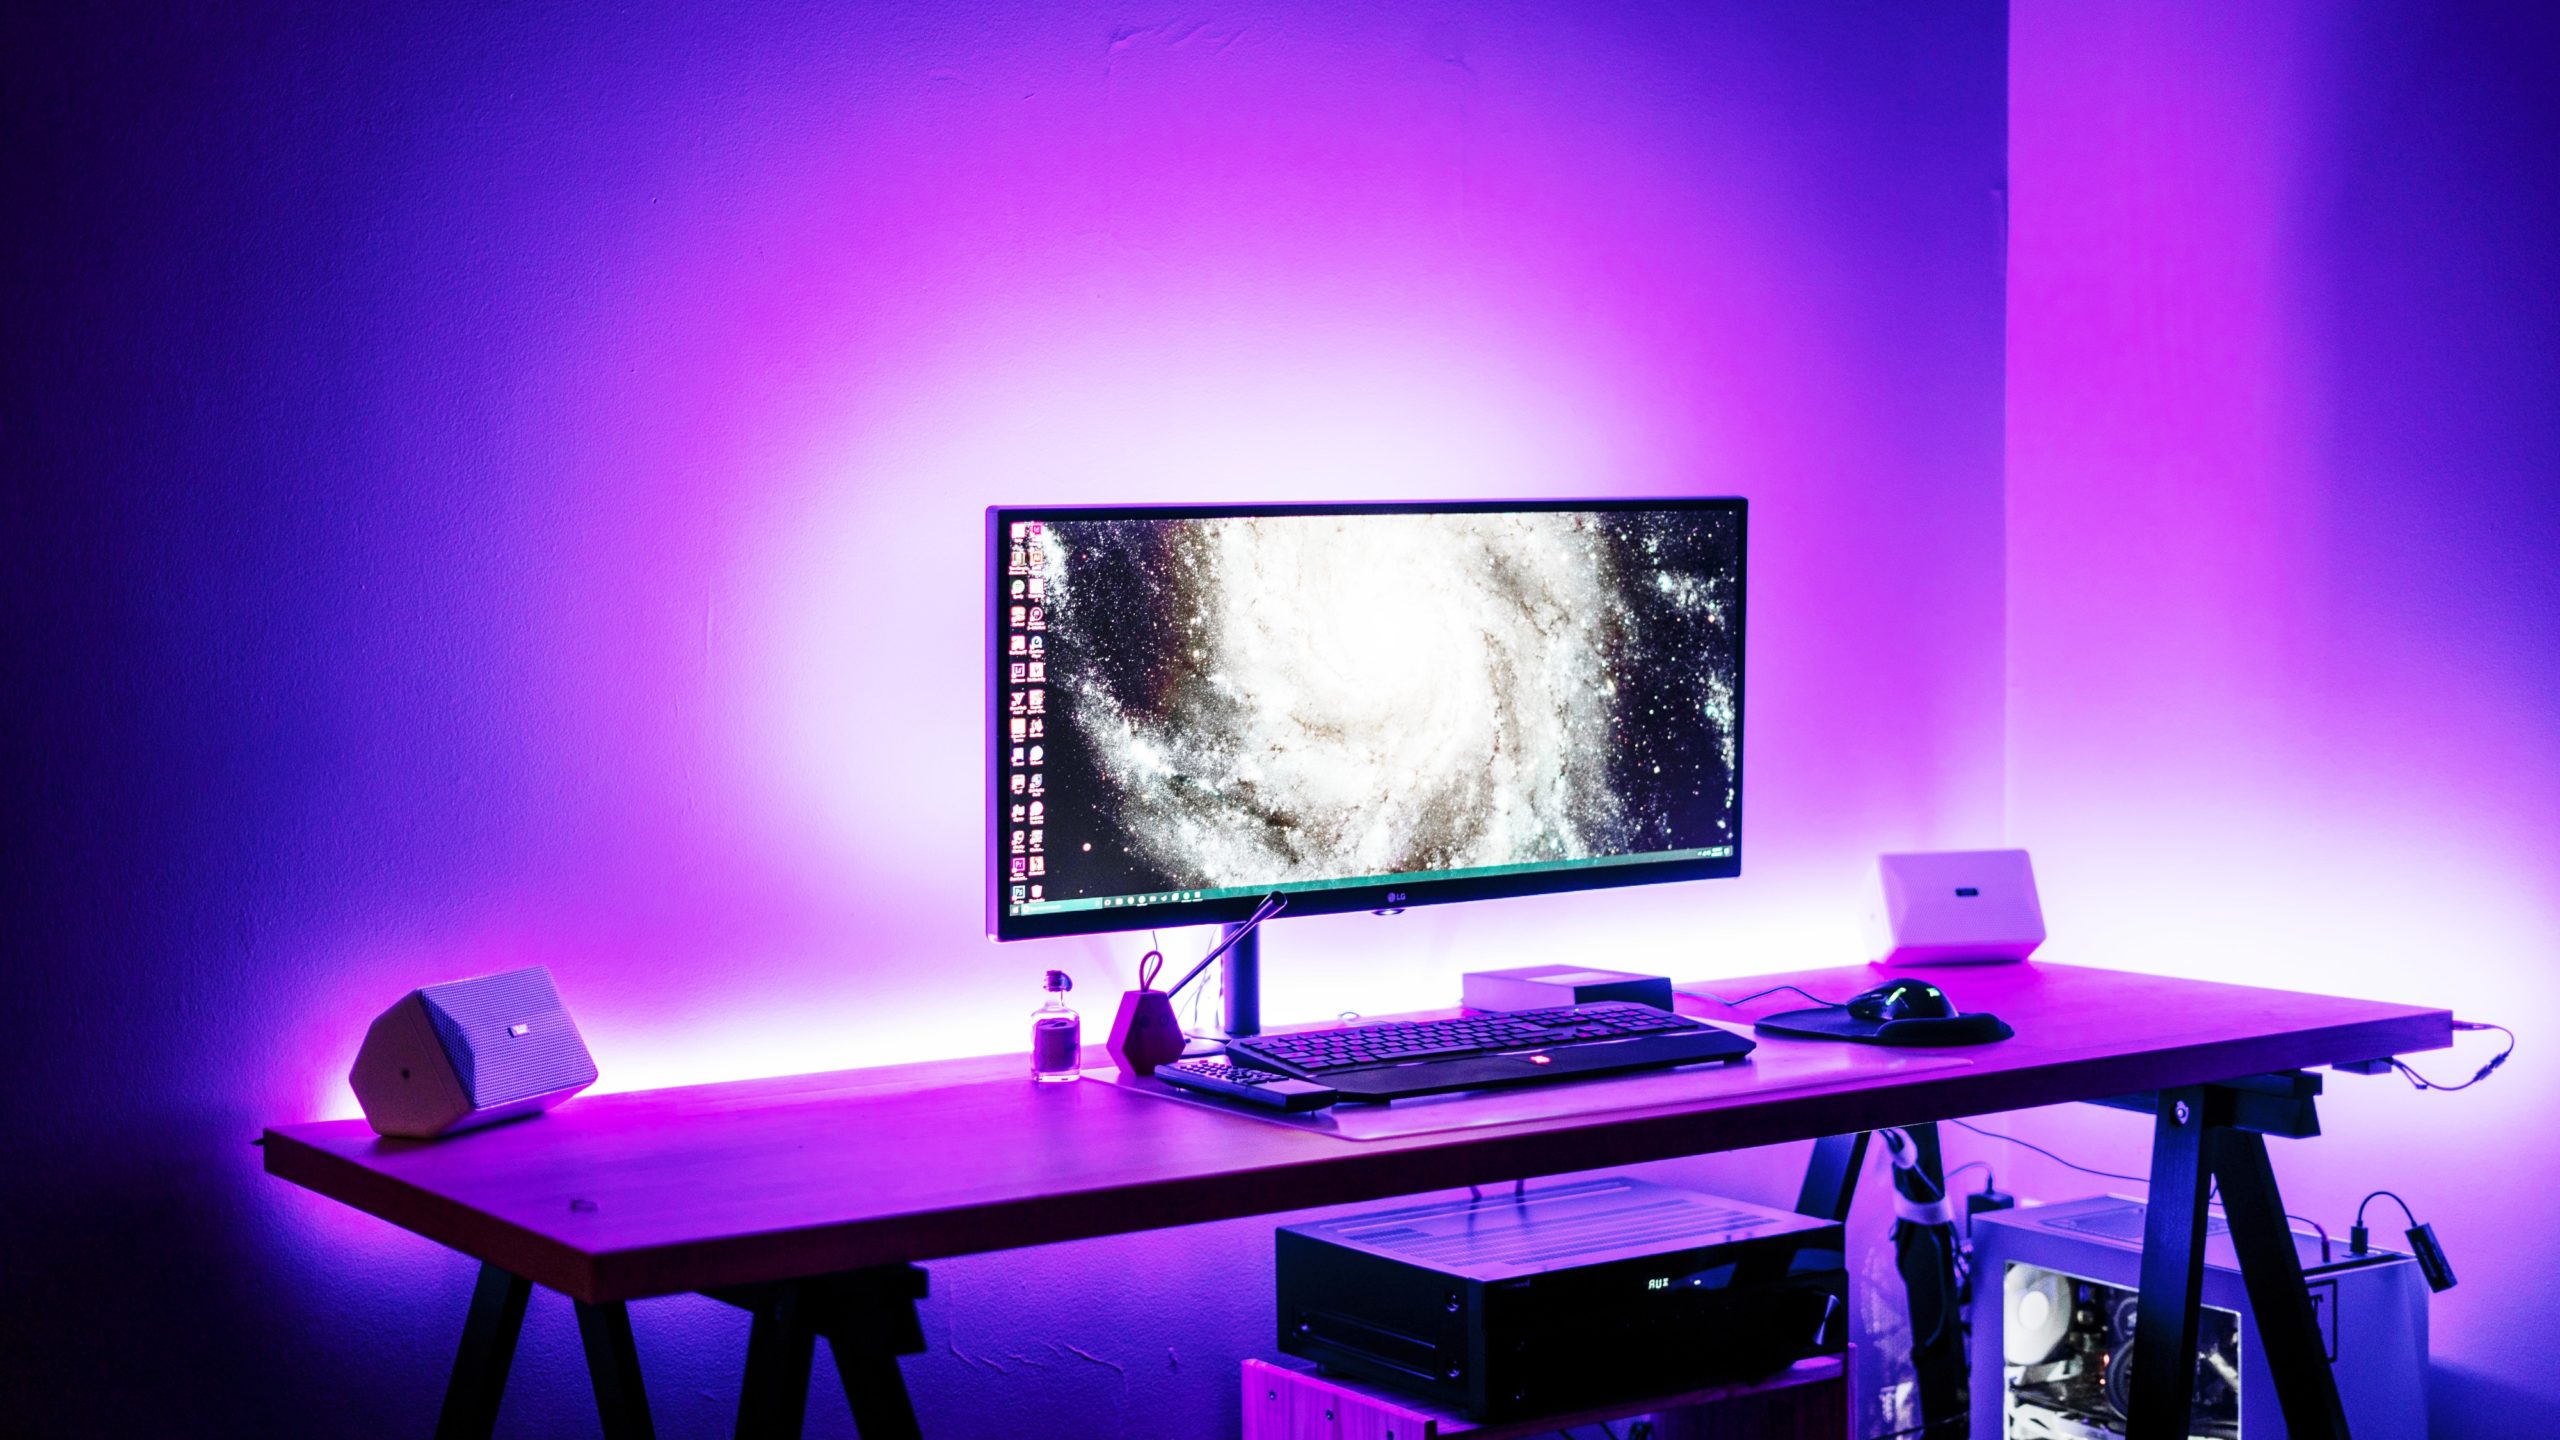 <img src="purple.jpg" alt="purple neon room with ai computer"/> 